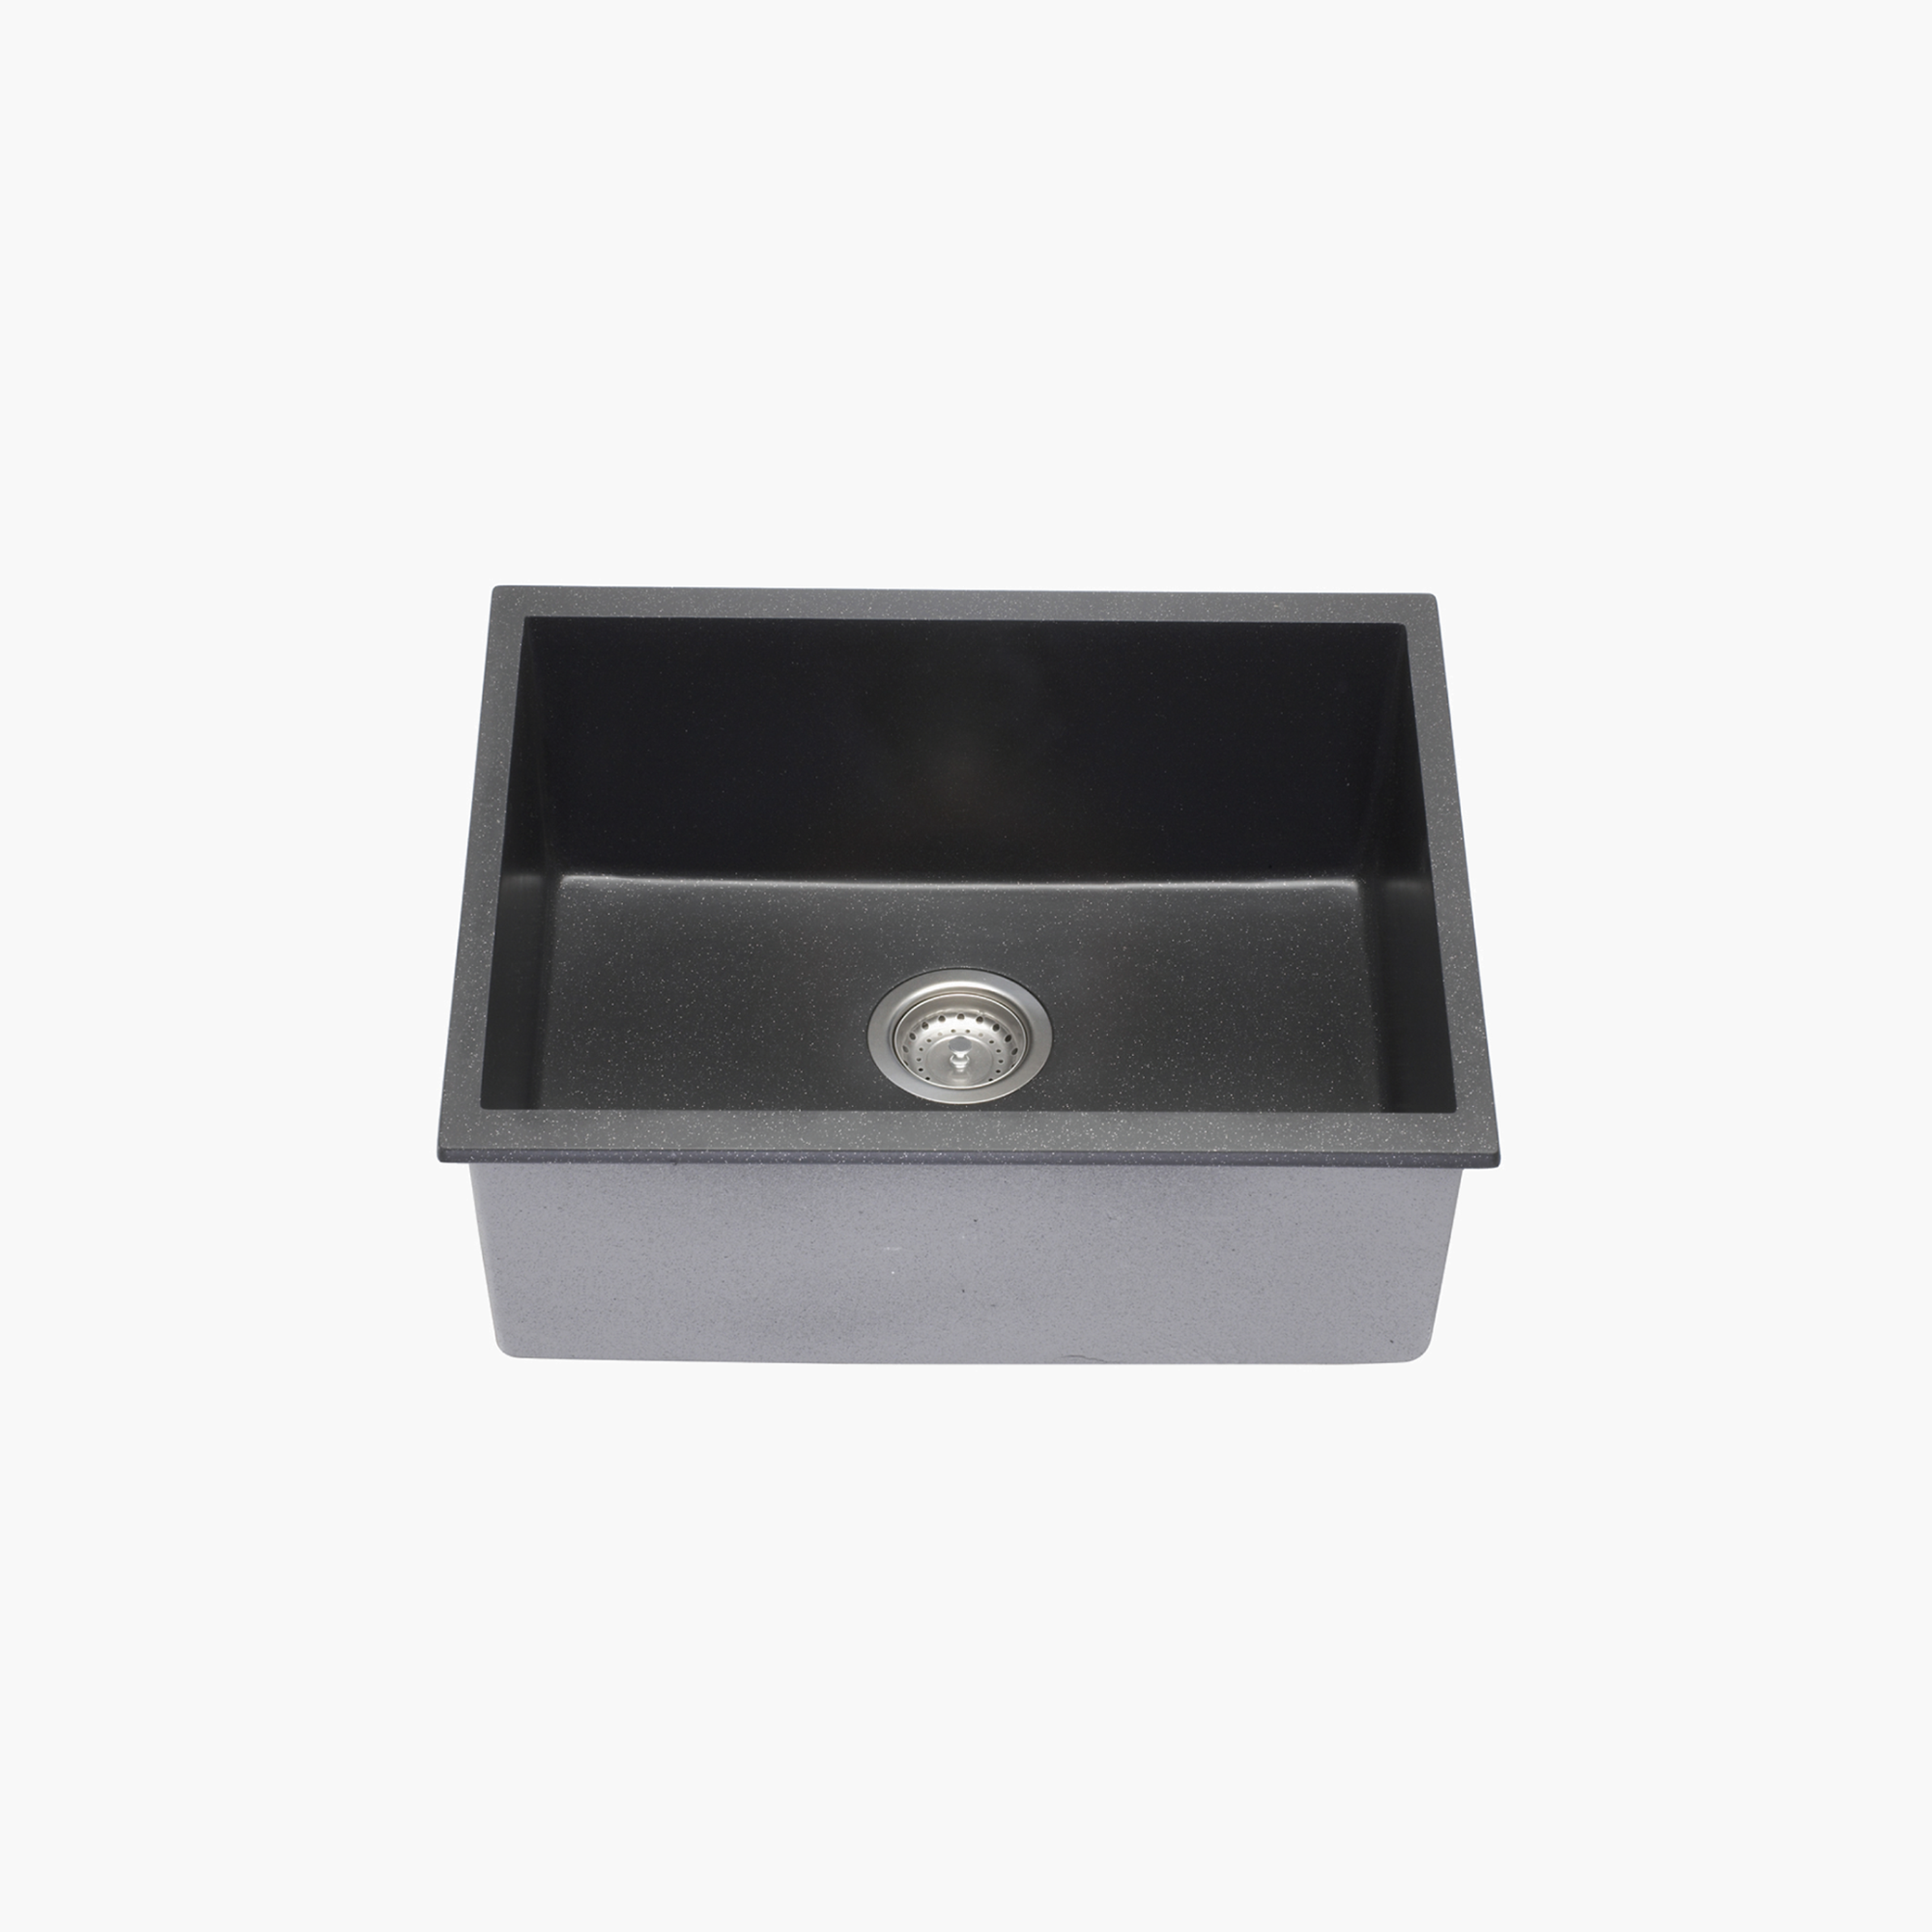 KBFMORE™ 23" Granite Single Bowl Undermount Kitchen Sink